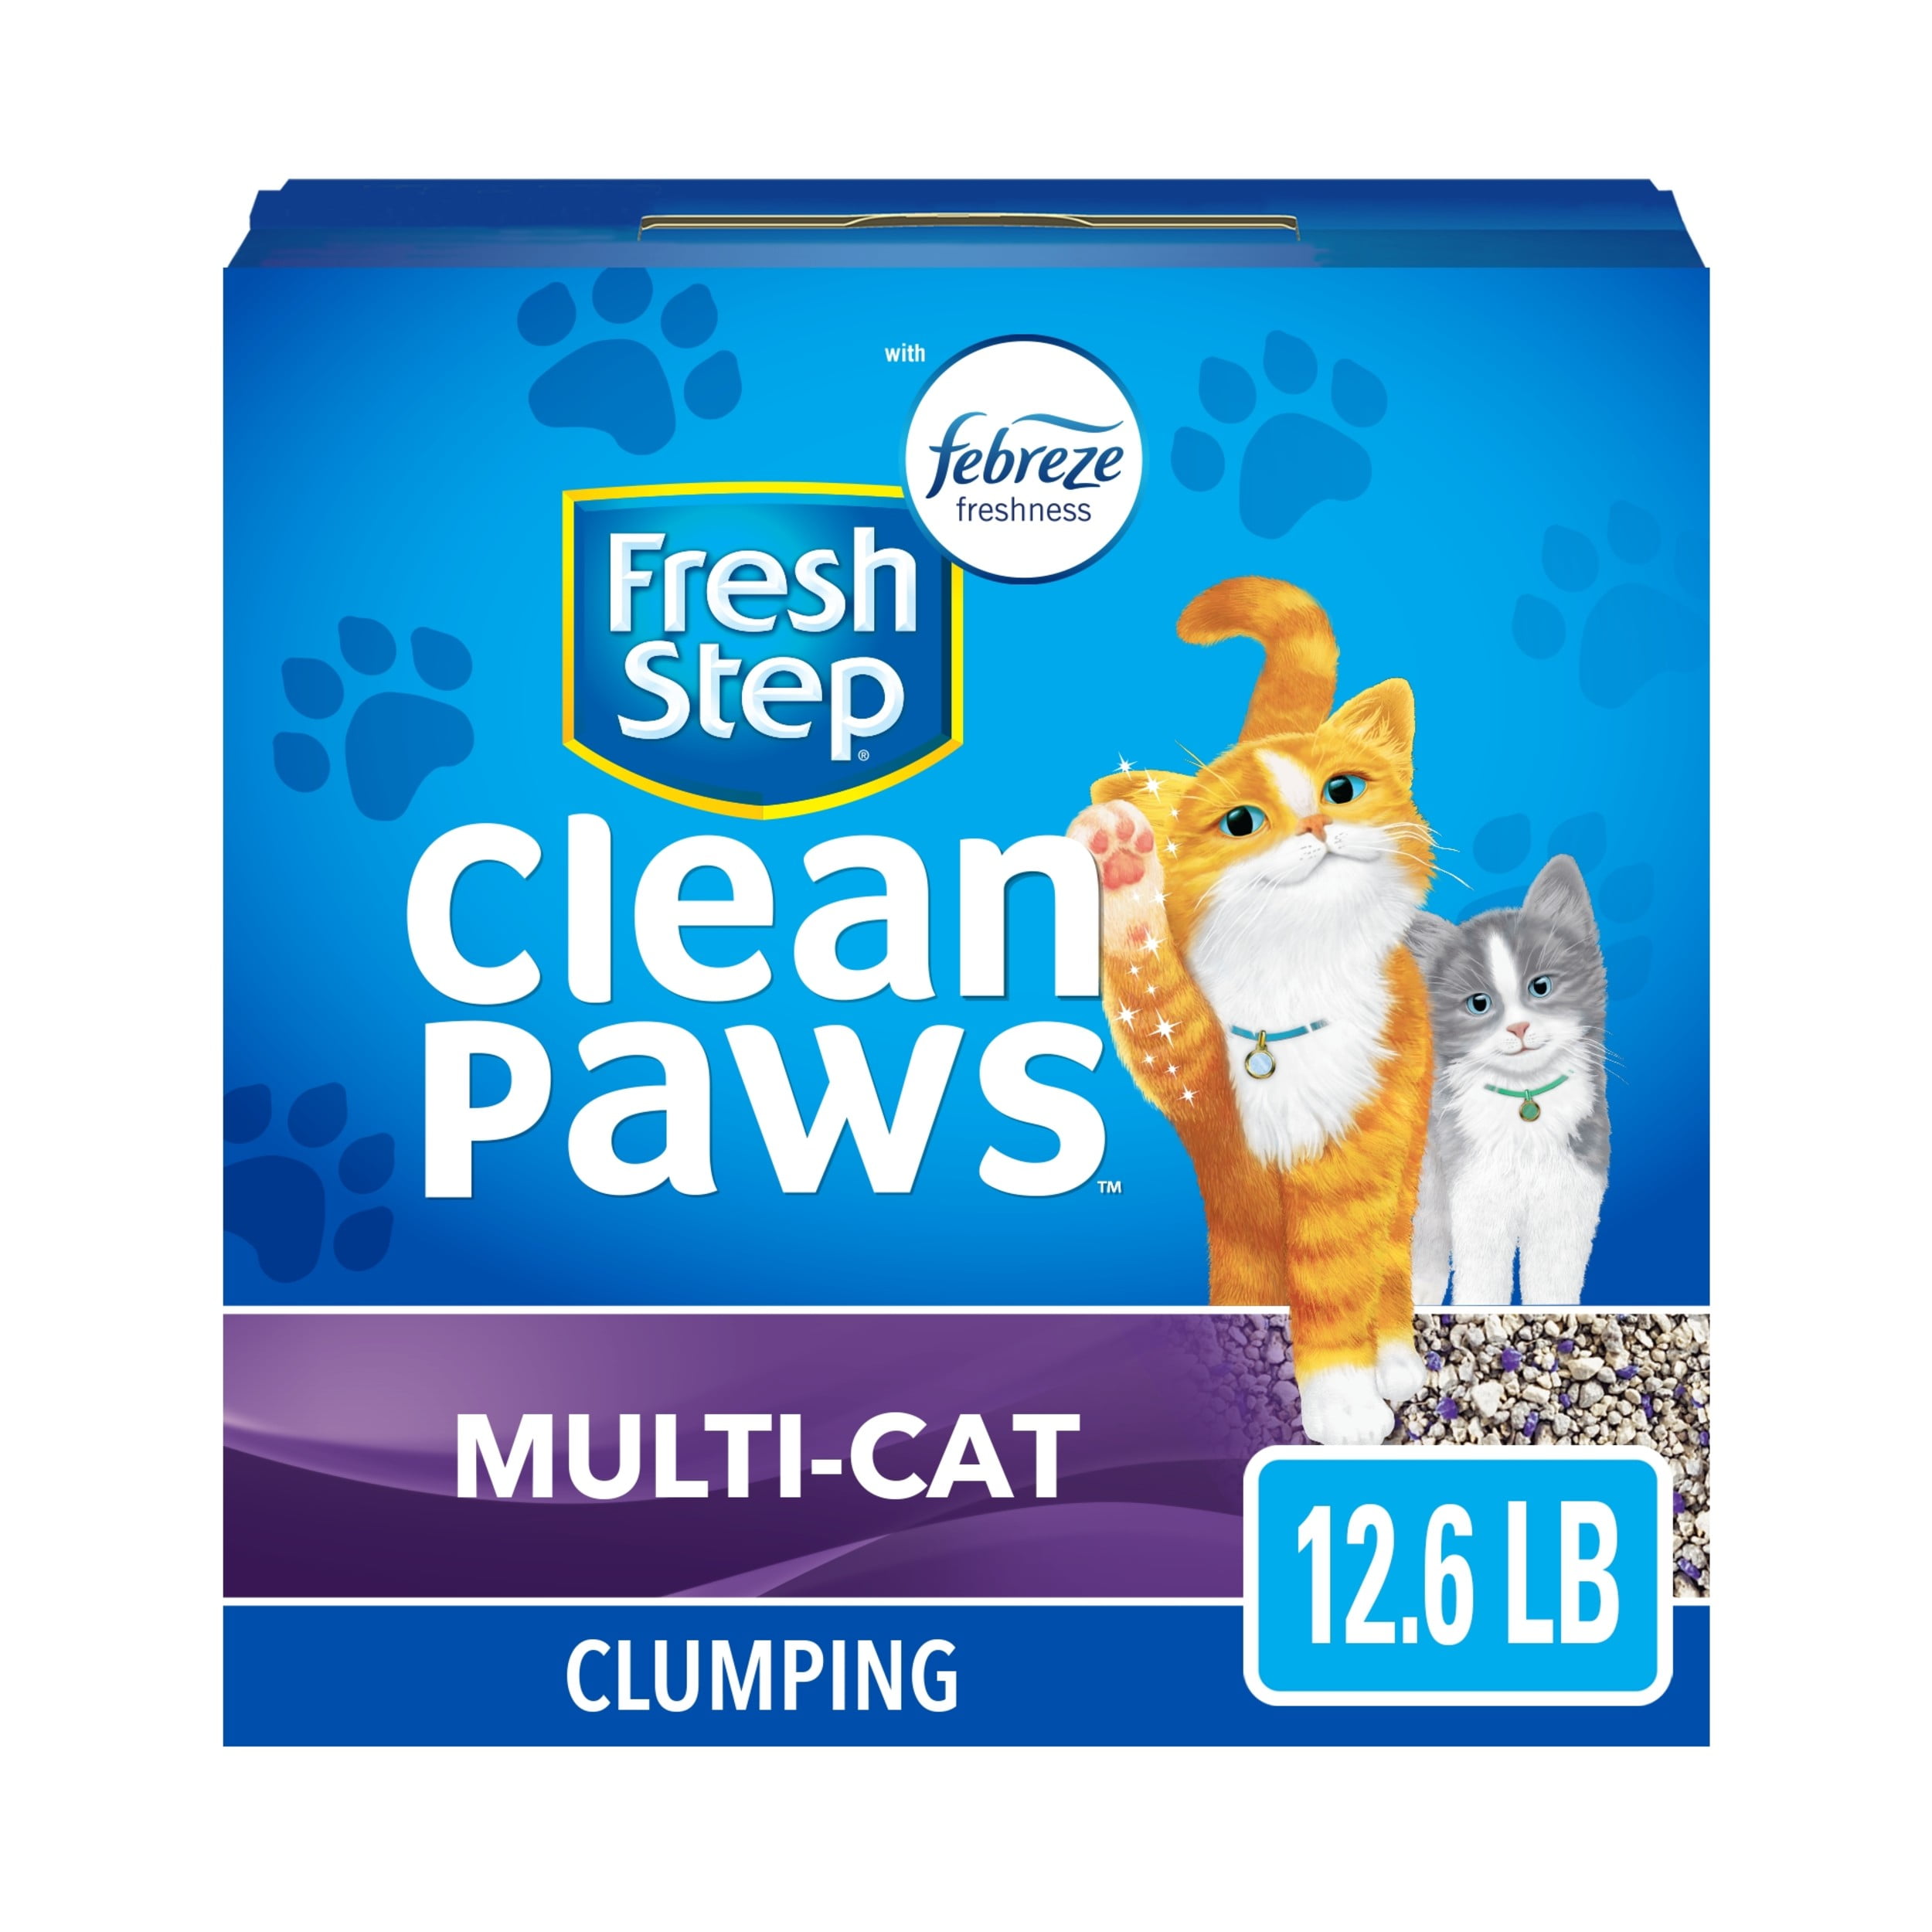 Fresh Step Advanced Clumping Cat Litter Advanced Clean Paws 37 lb 